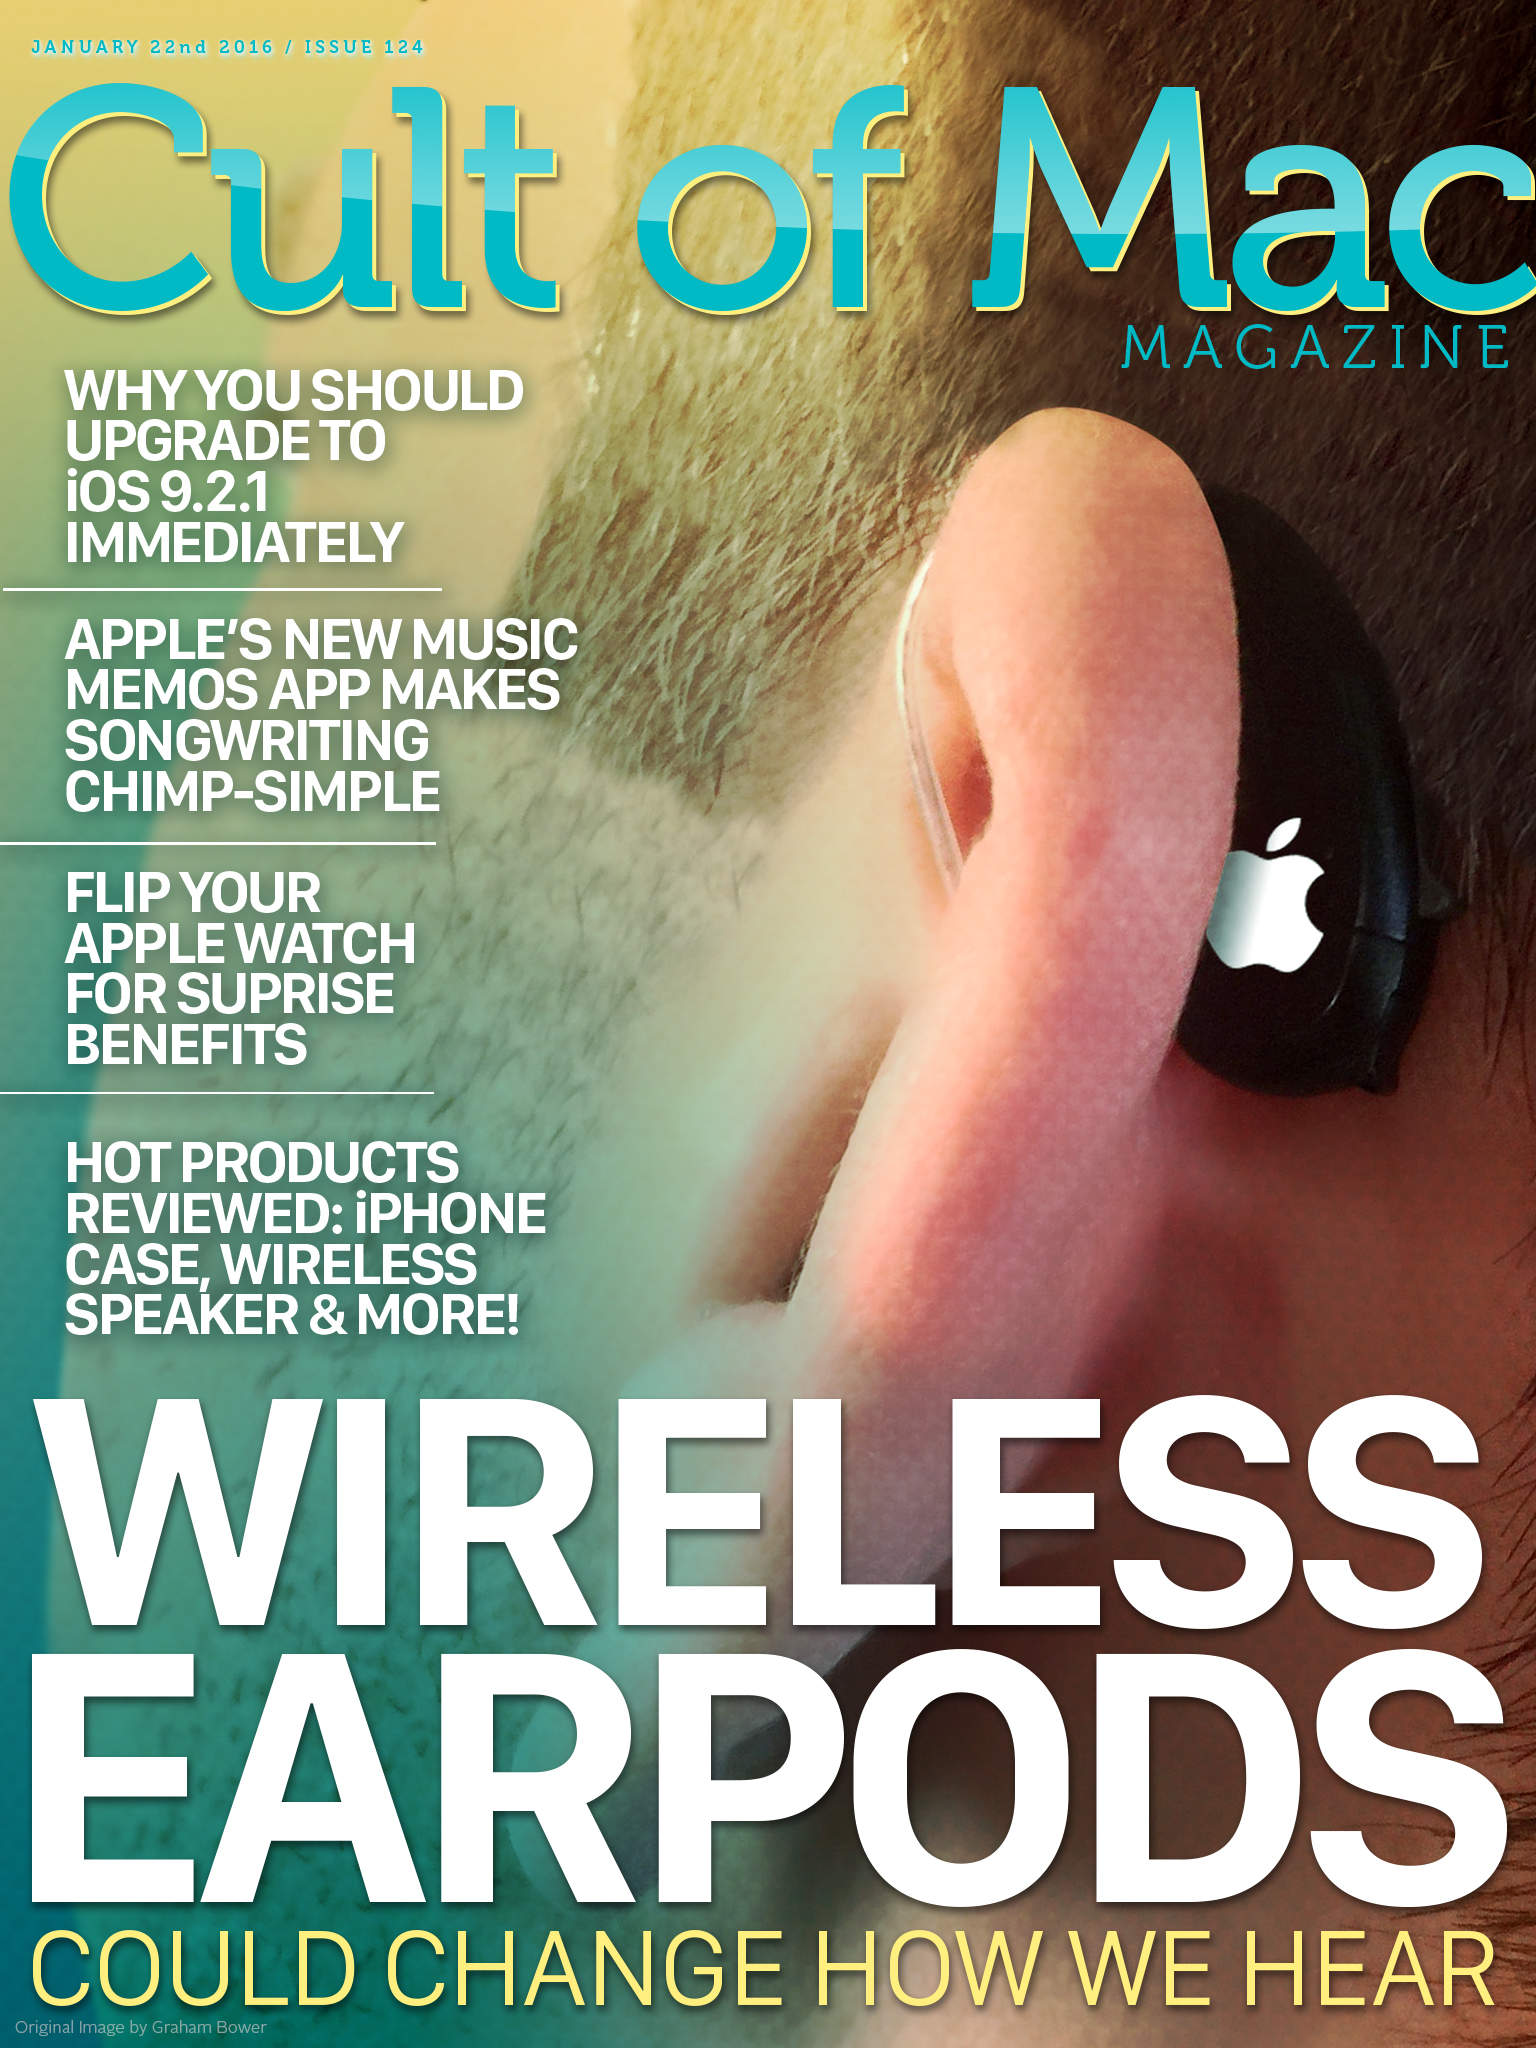 How will Apple's next EarPod revolution change things for the better?